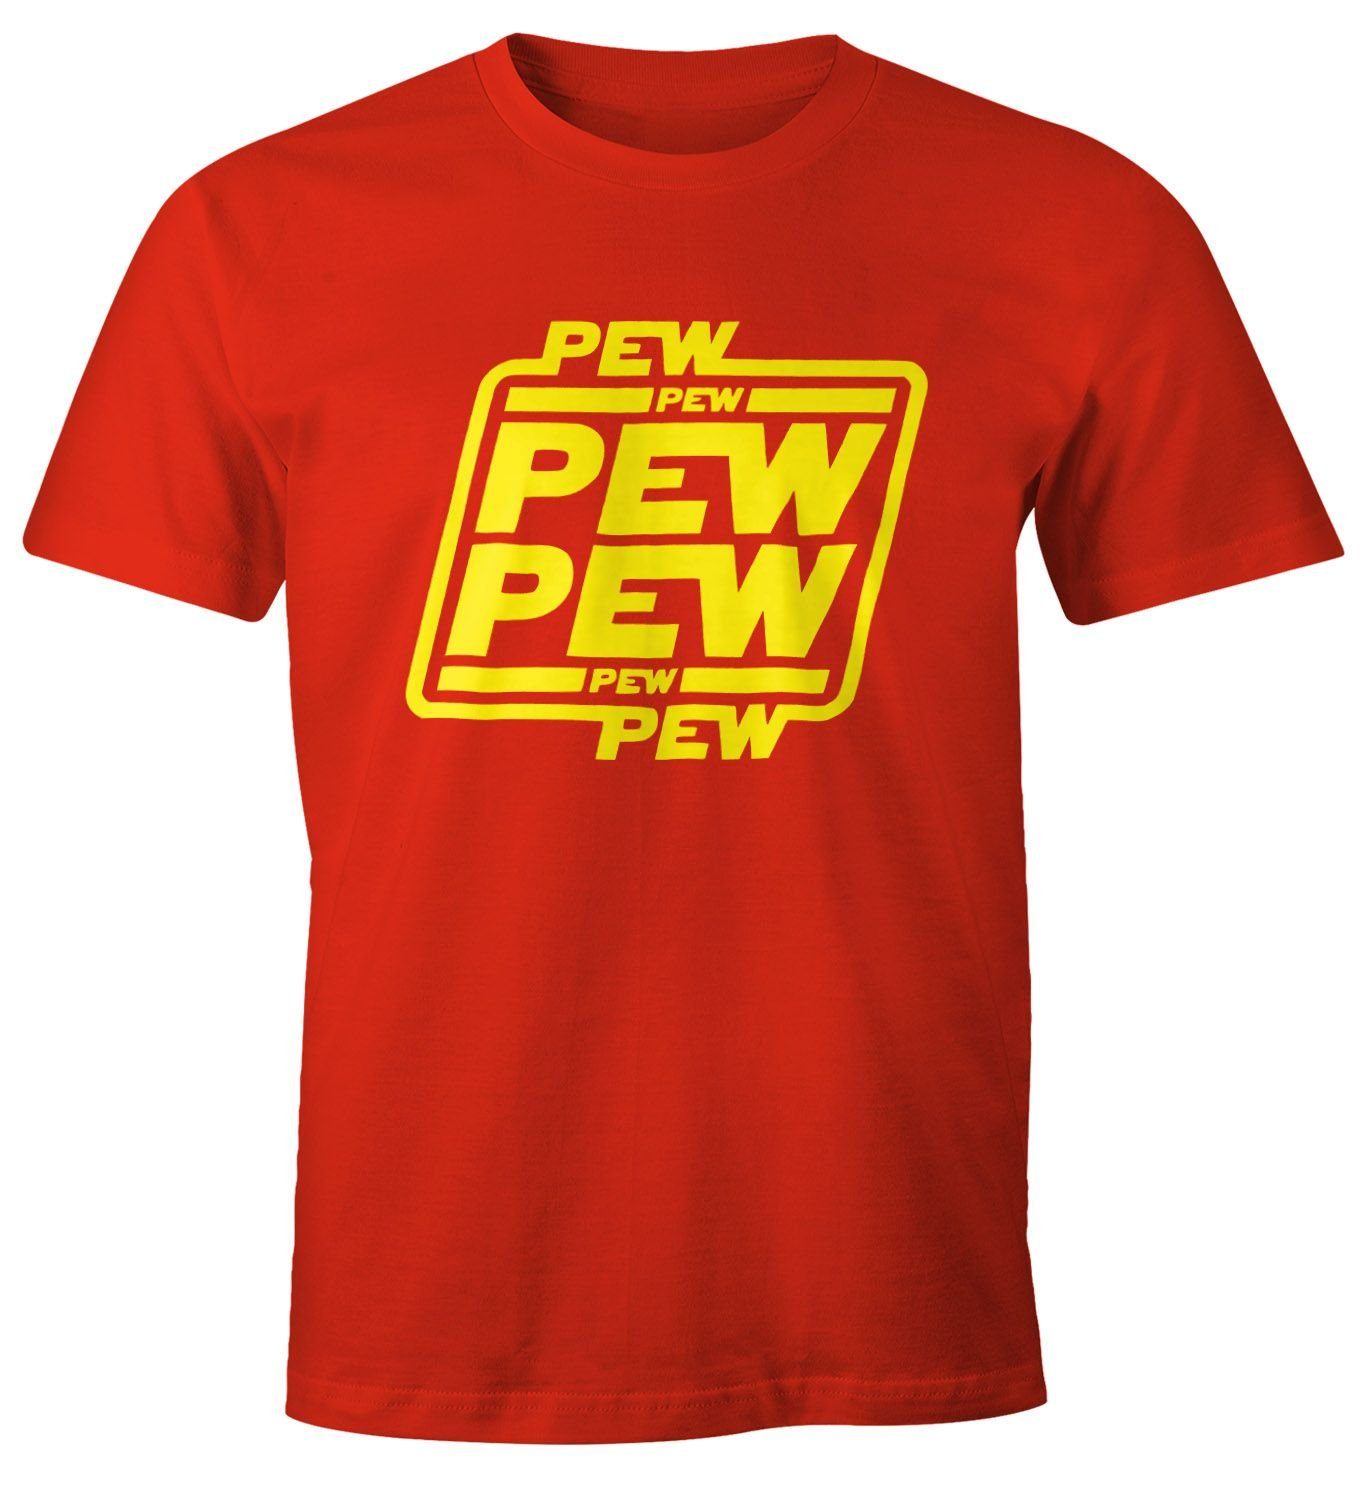 MoonWorks Print-Shirt Herren T-Shirt mit Print Pew rot Moonworks® Fun-Shirt Pew Pew